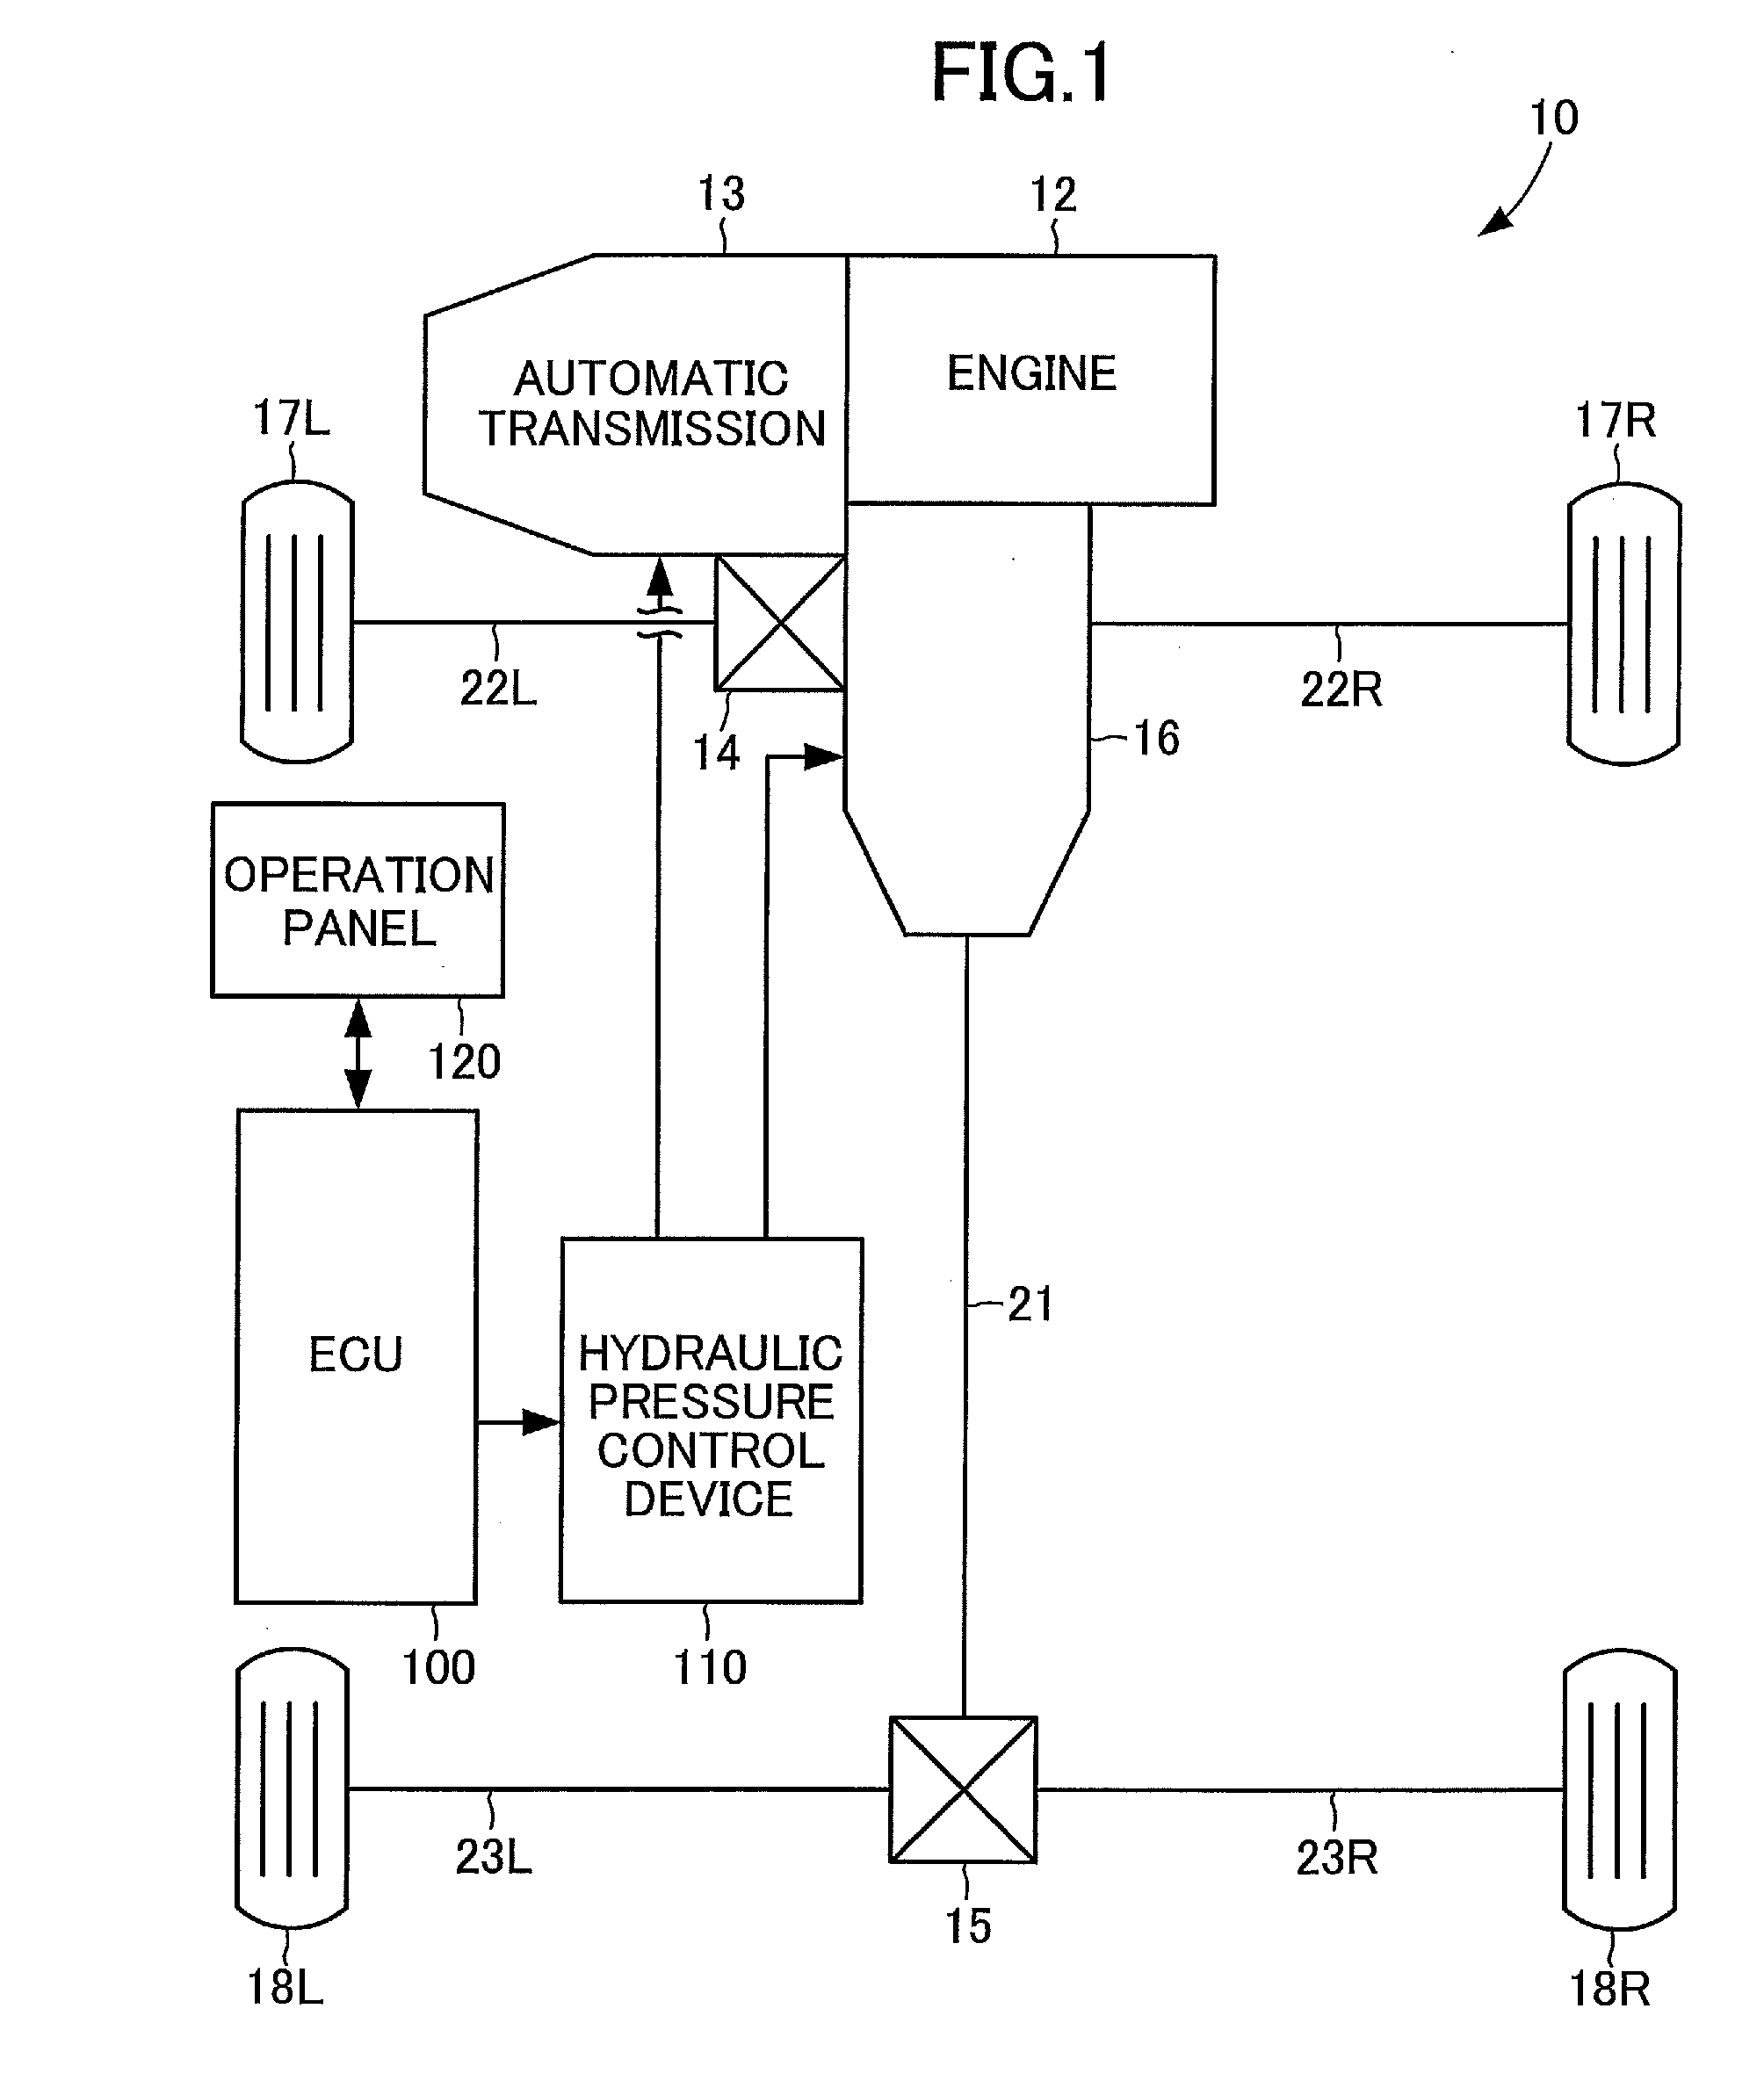 Vehicle control apparatus